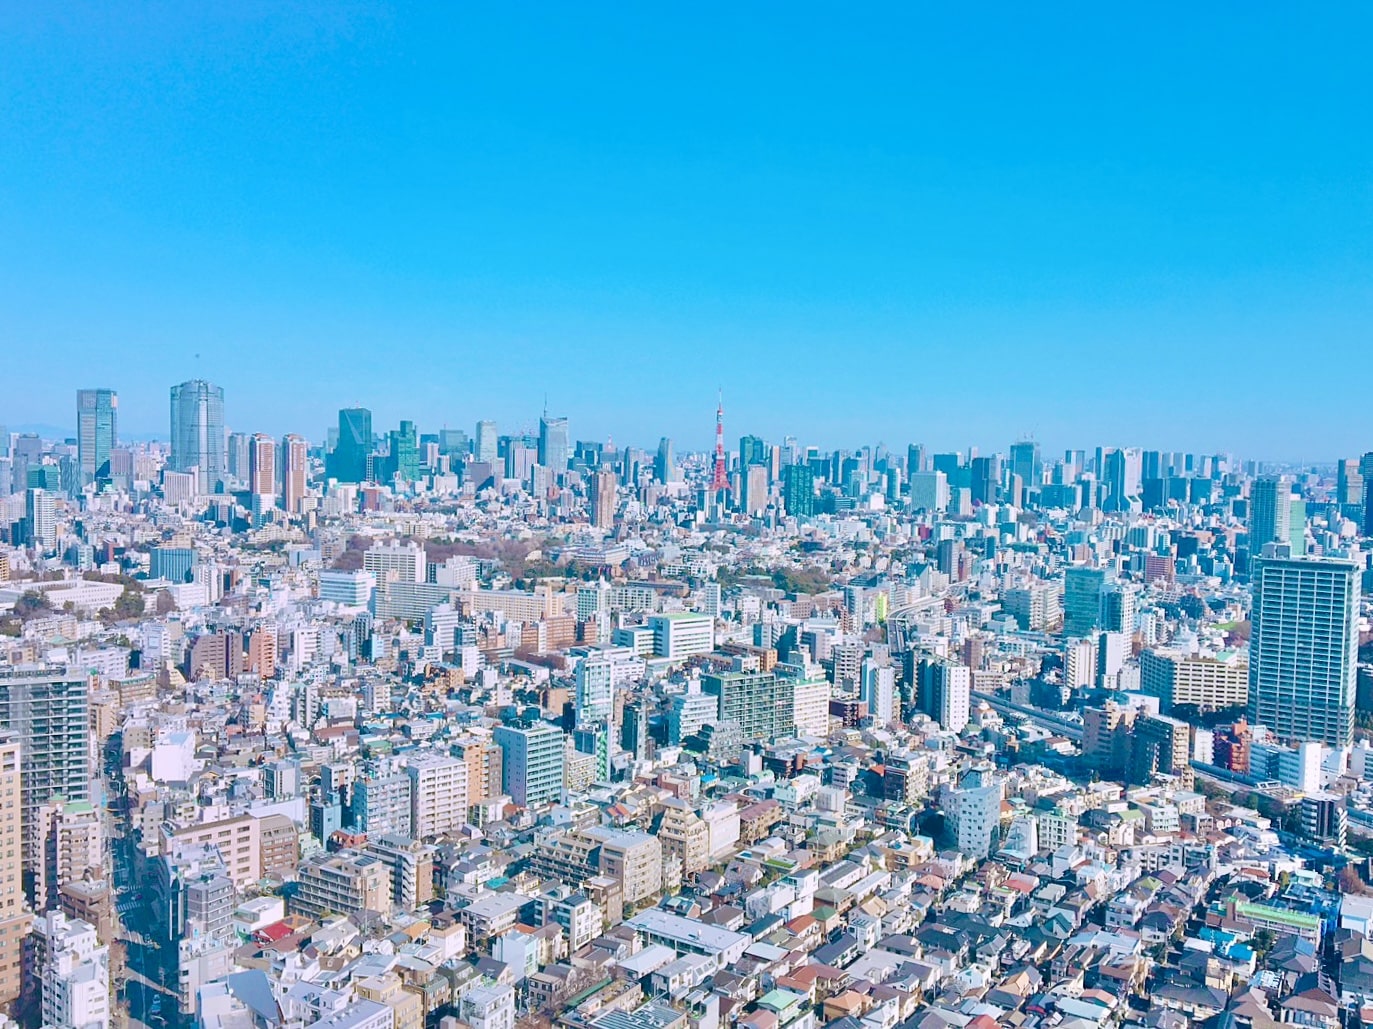 Tokyo panoramic view